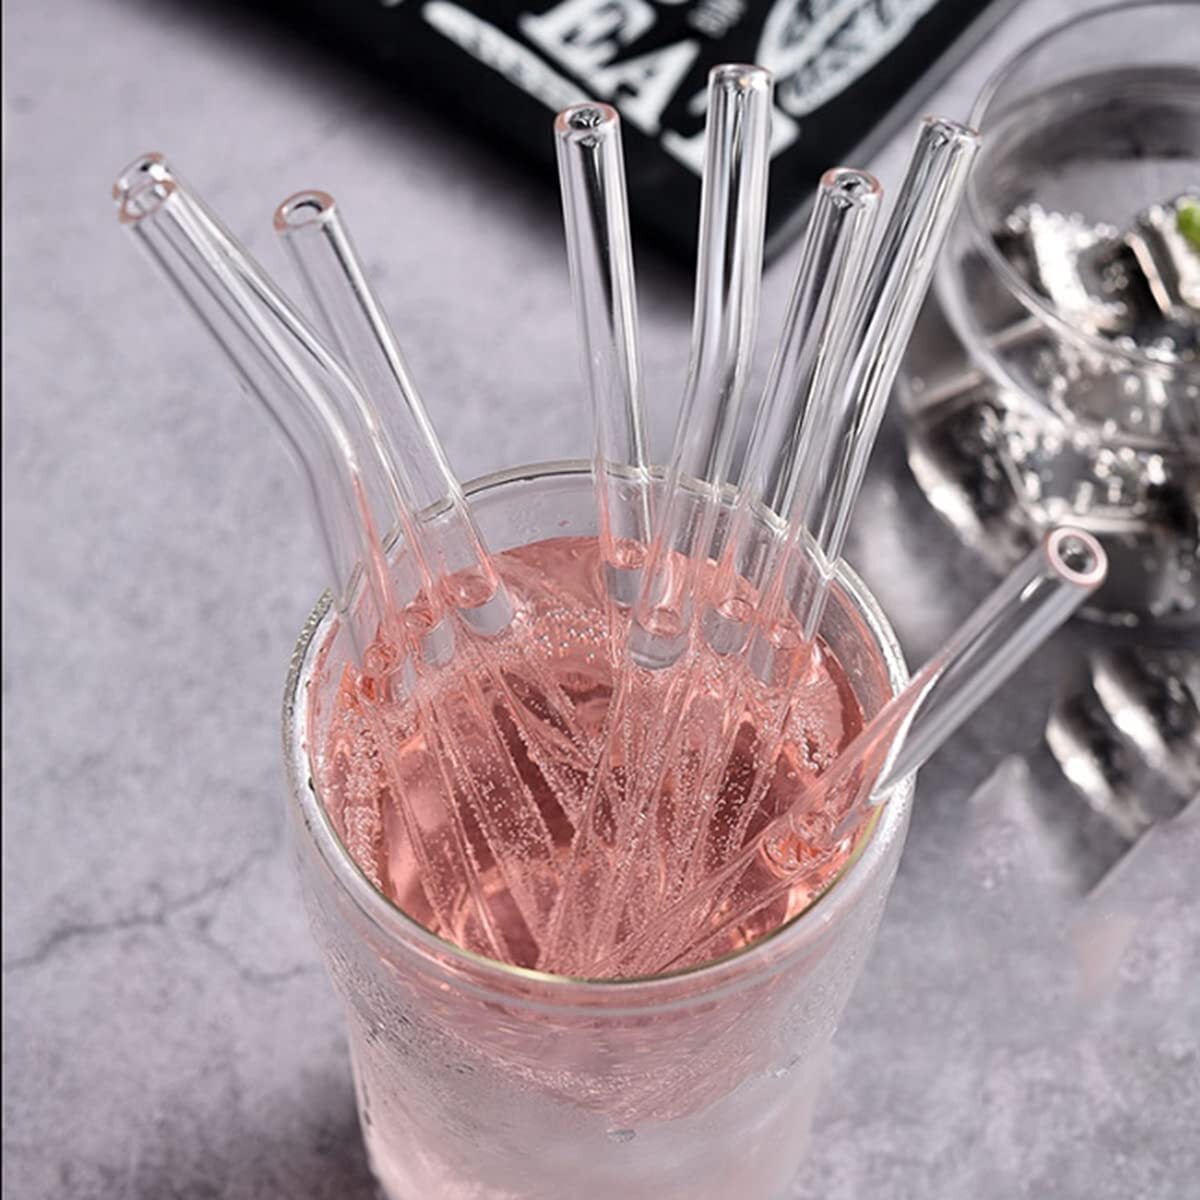 4PCS Reusable Clear Straws Straight Glass Smoothie Milkshakes Drinking  Straw Set